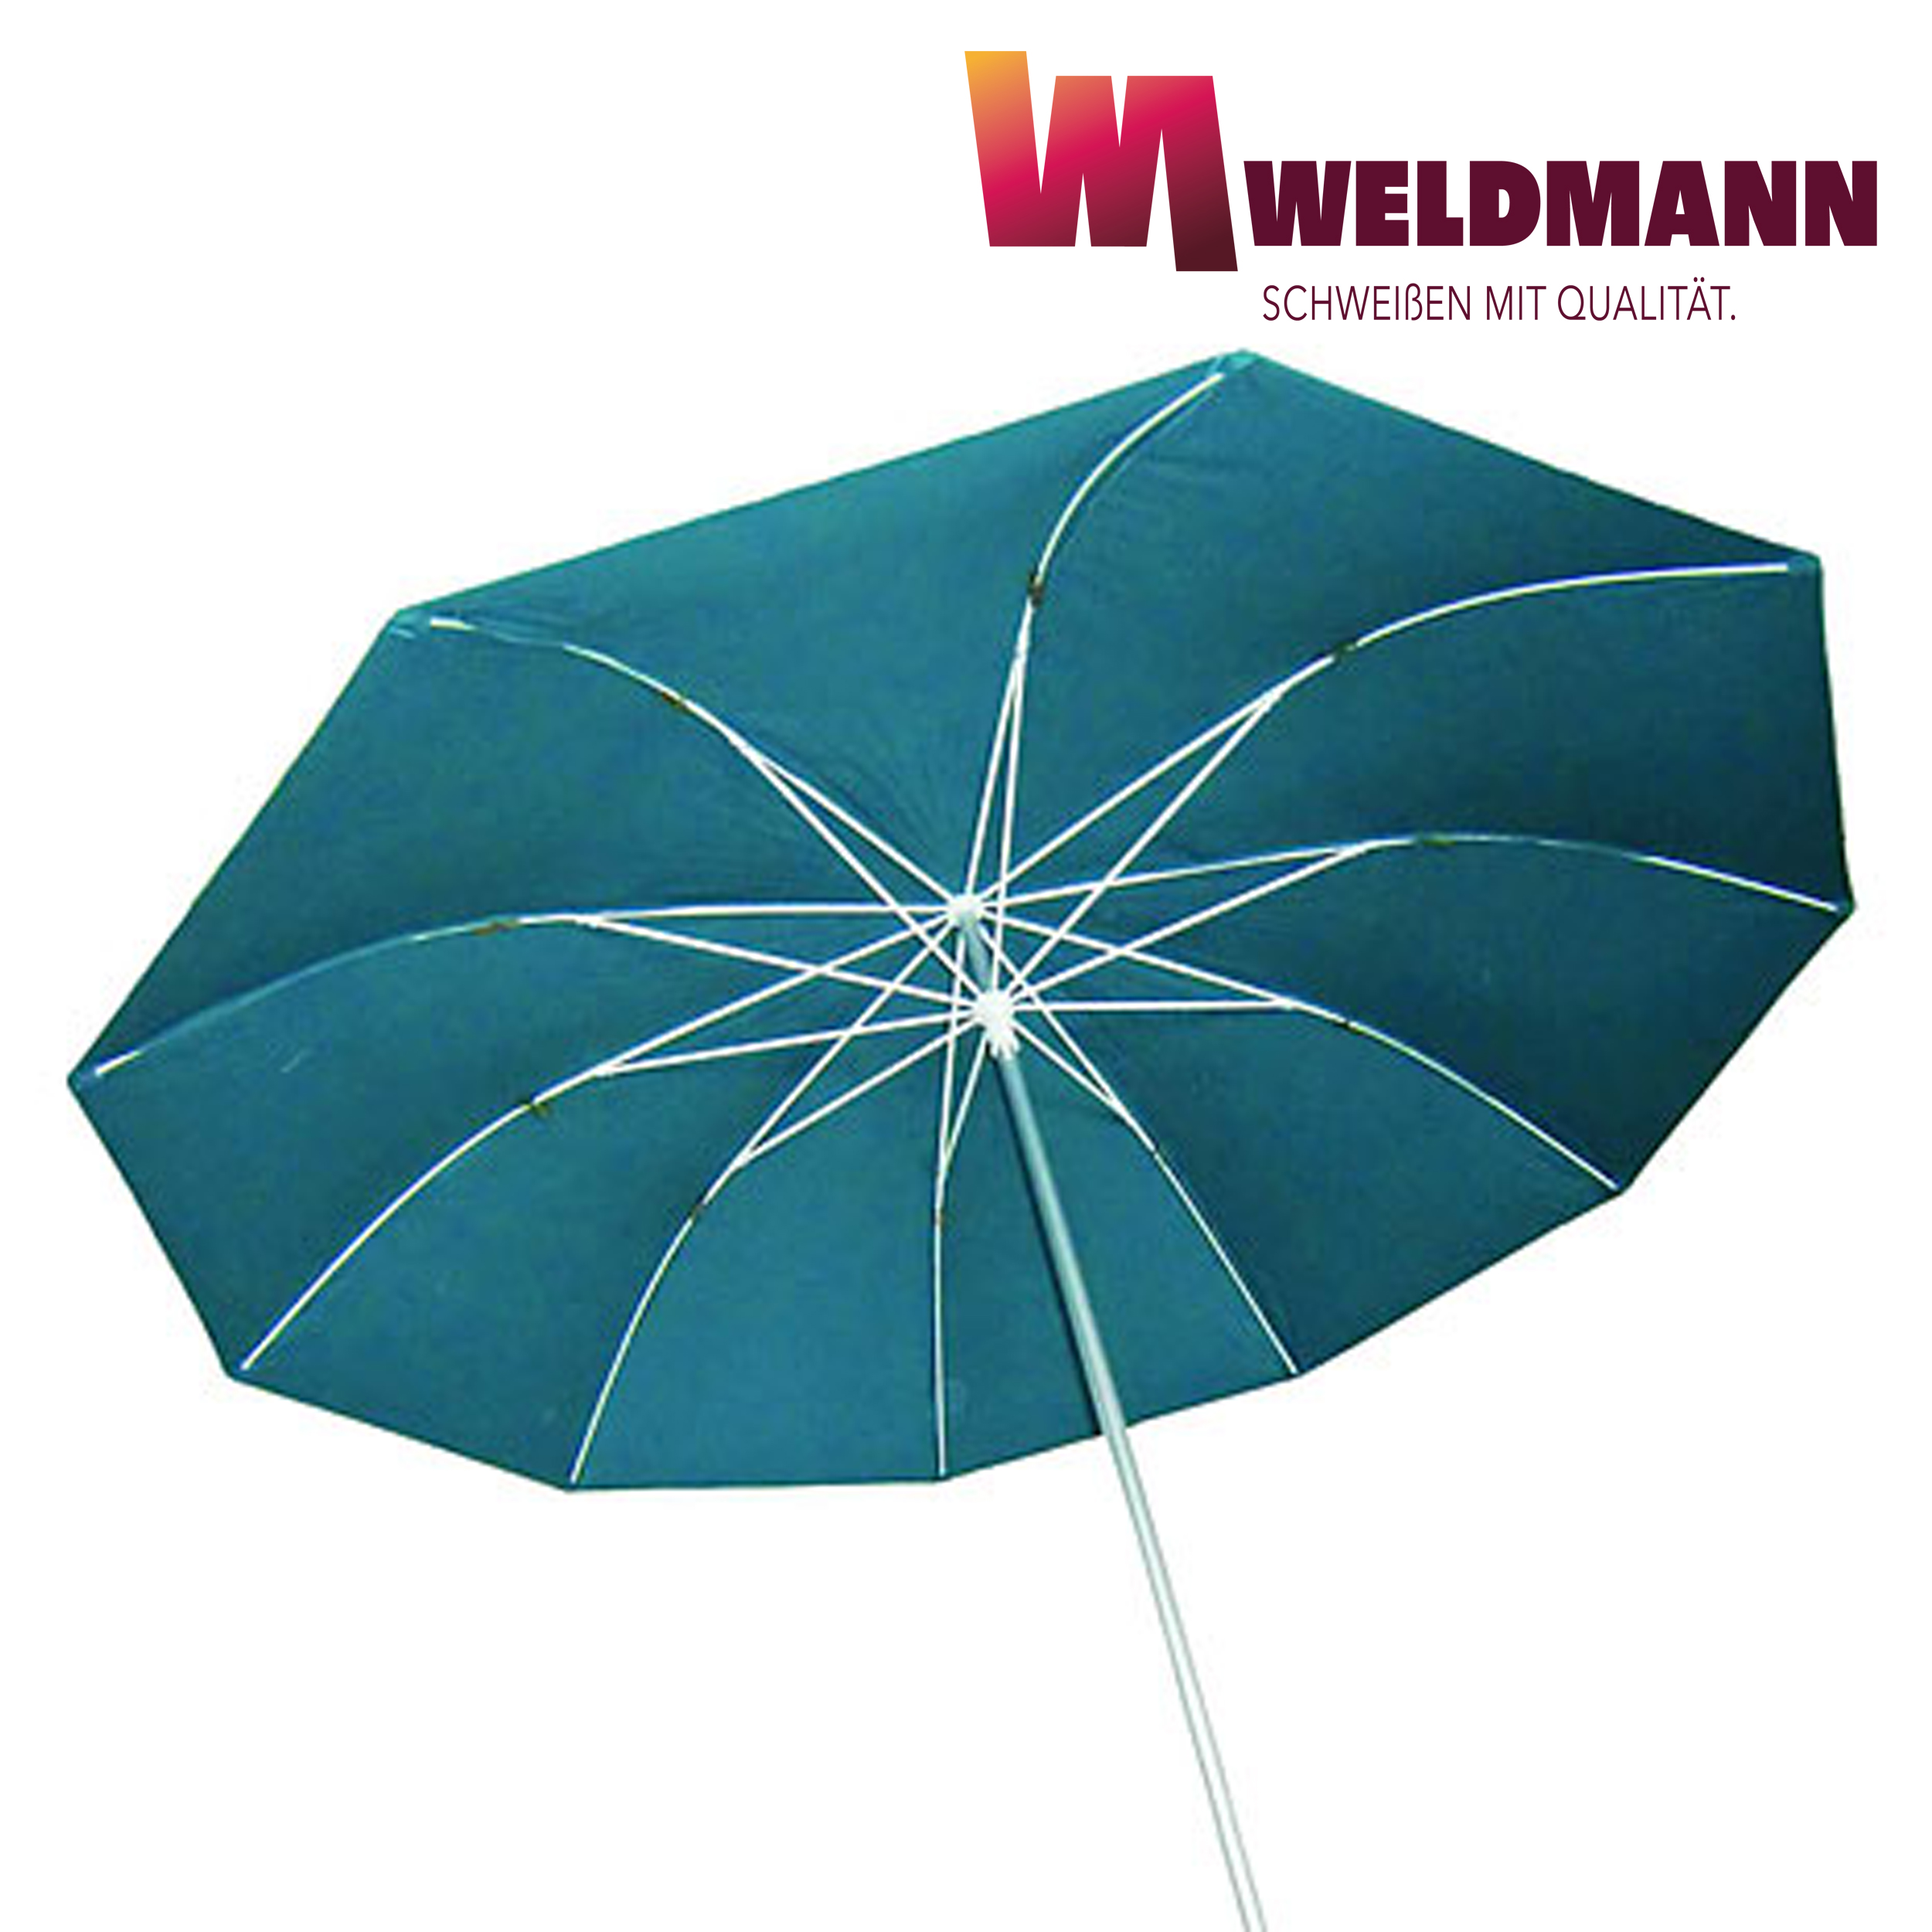 welding protective umbrella - heavy and flexible version